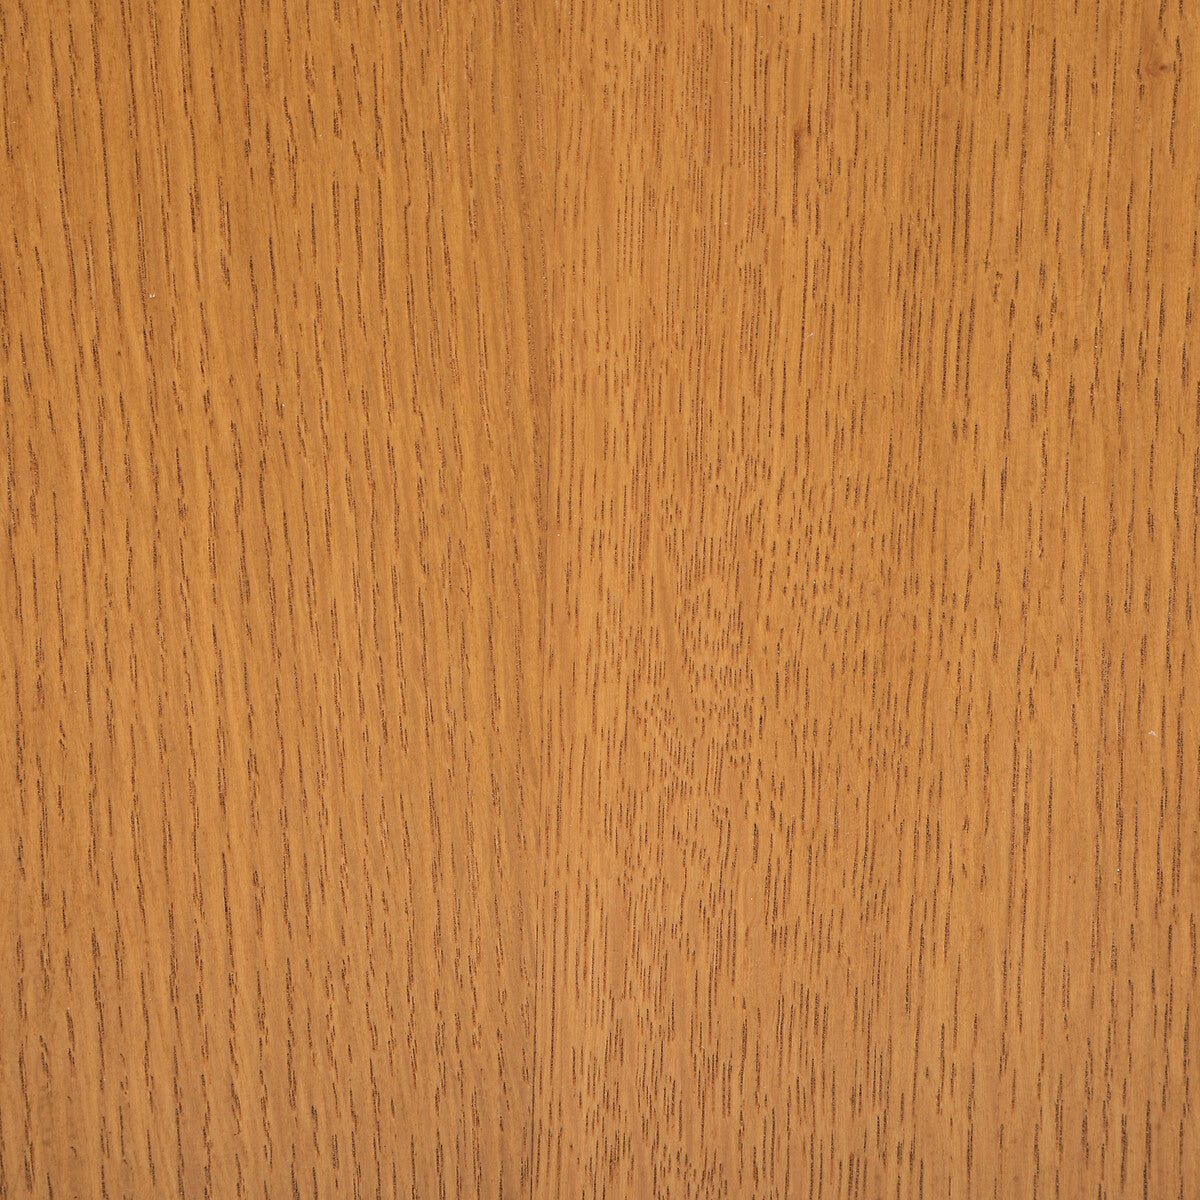 BEAU Macon oak veneer 2D-4V bookshelf - L92xD39xH180cm - Brown